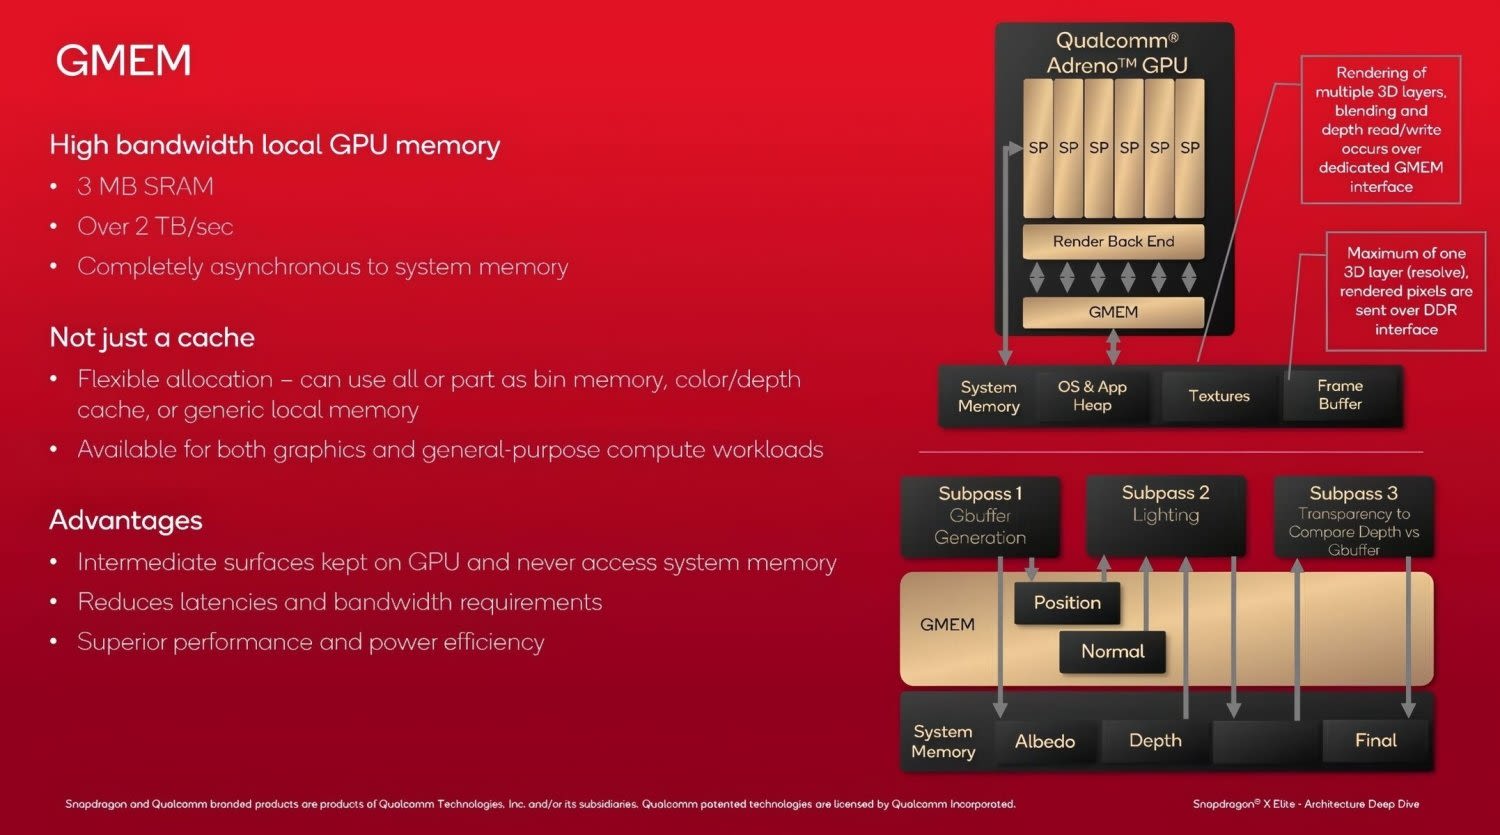 Qualcomm Adreno X1 GPU detailed: specs, performance, Adreno Control Panel shown off